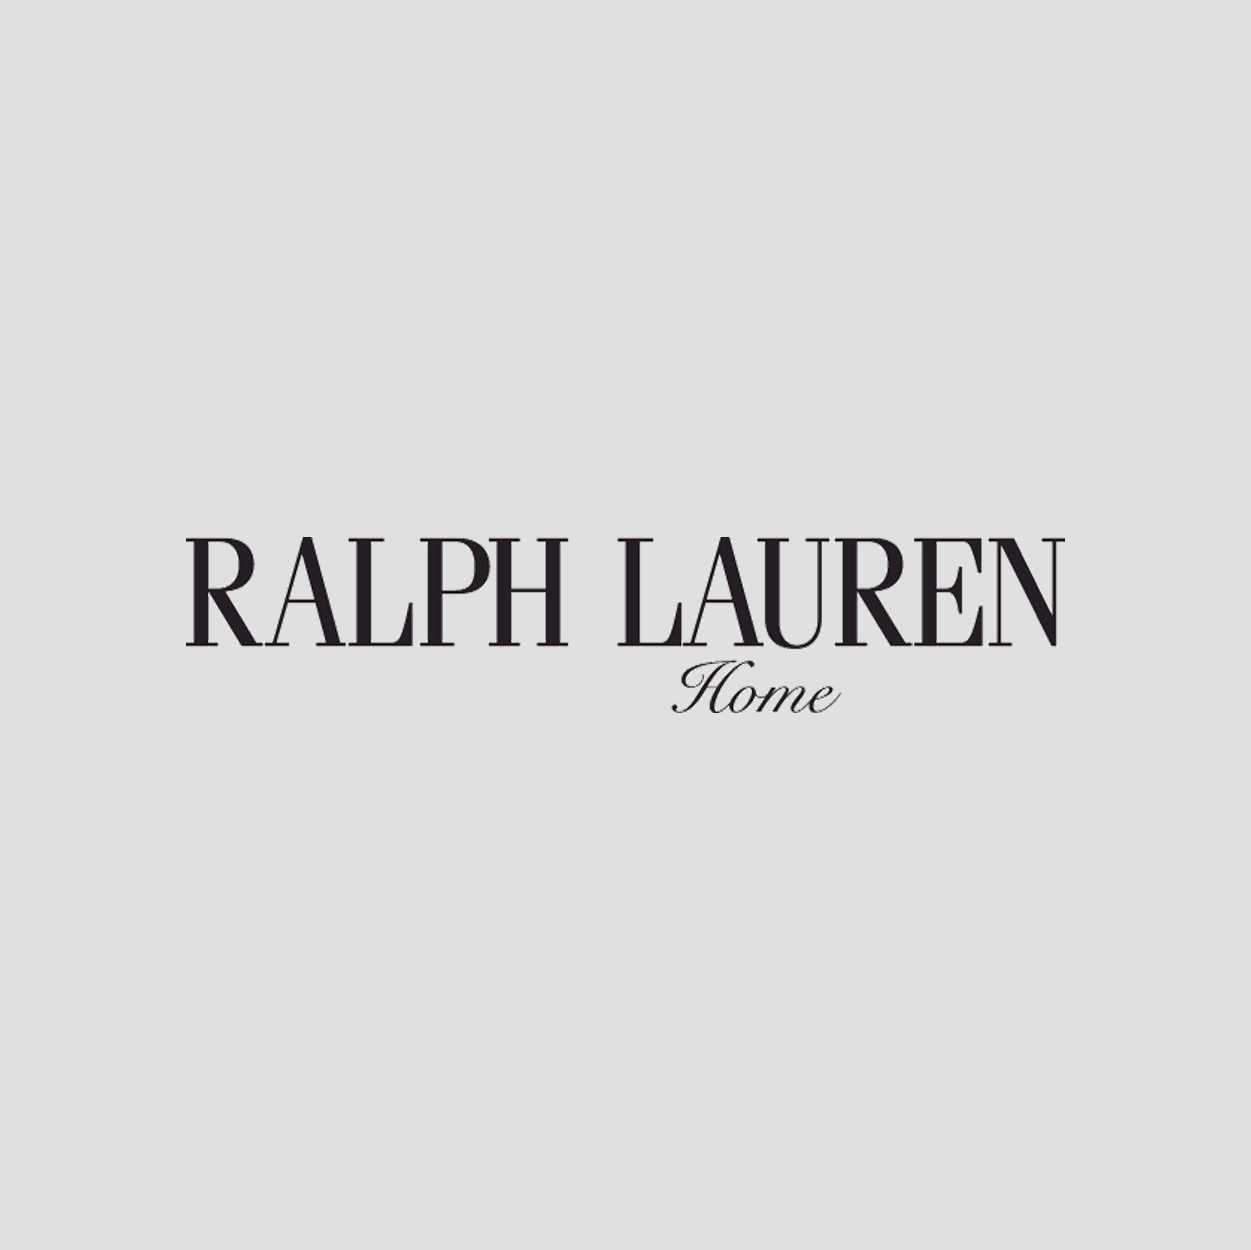 Ralph Lauren Iconic Wallpaper London Pany